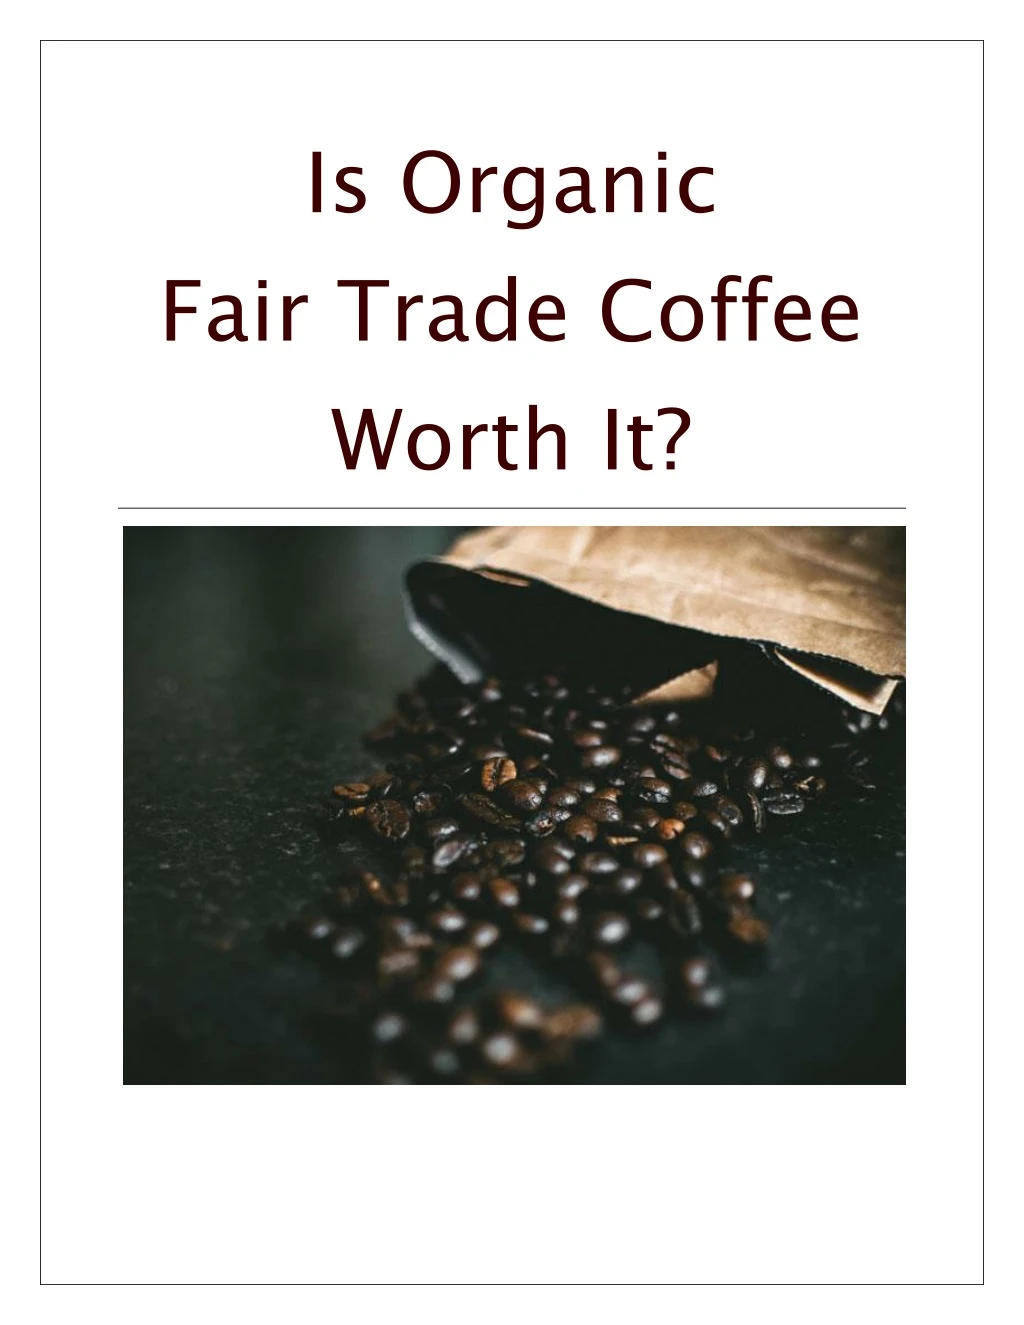 is organic fair trade coffee worth it